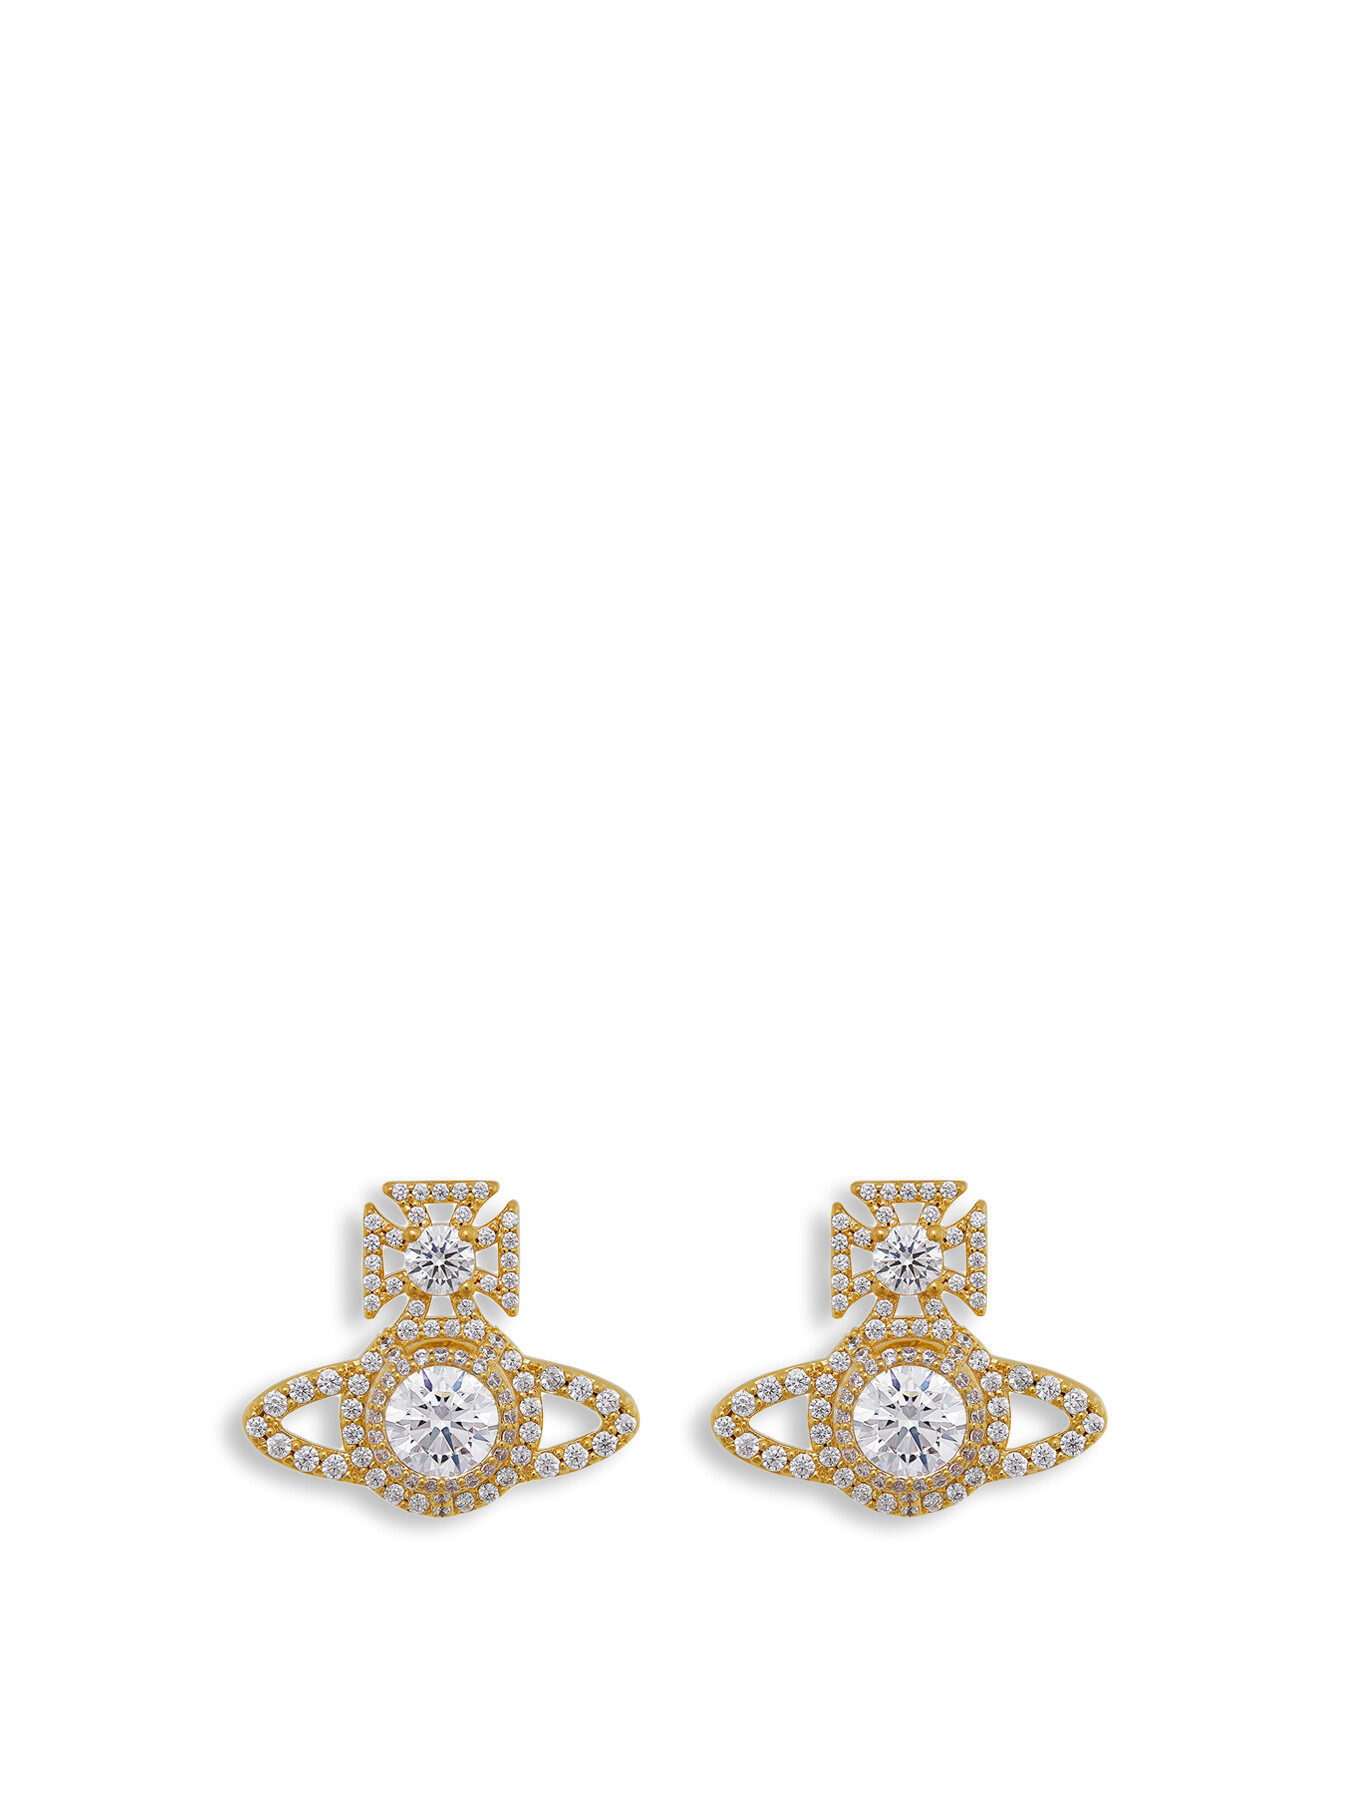 Vivienne Westwood Women's Norabelle Earrings Gold